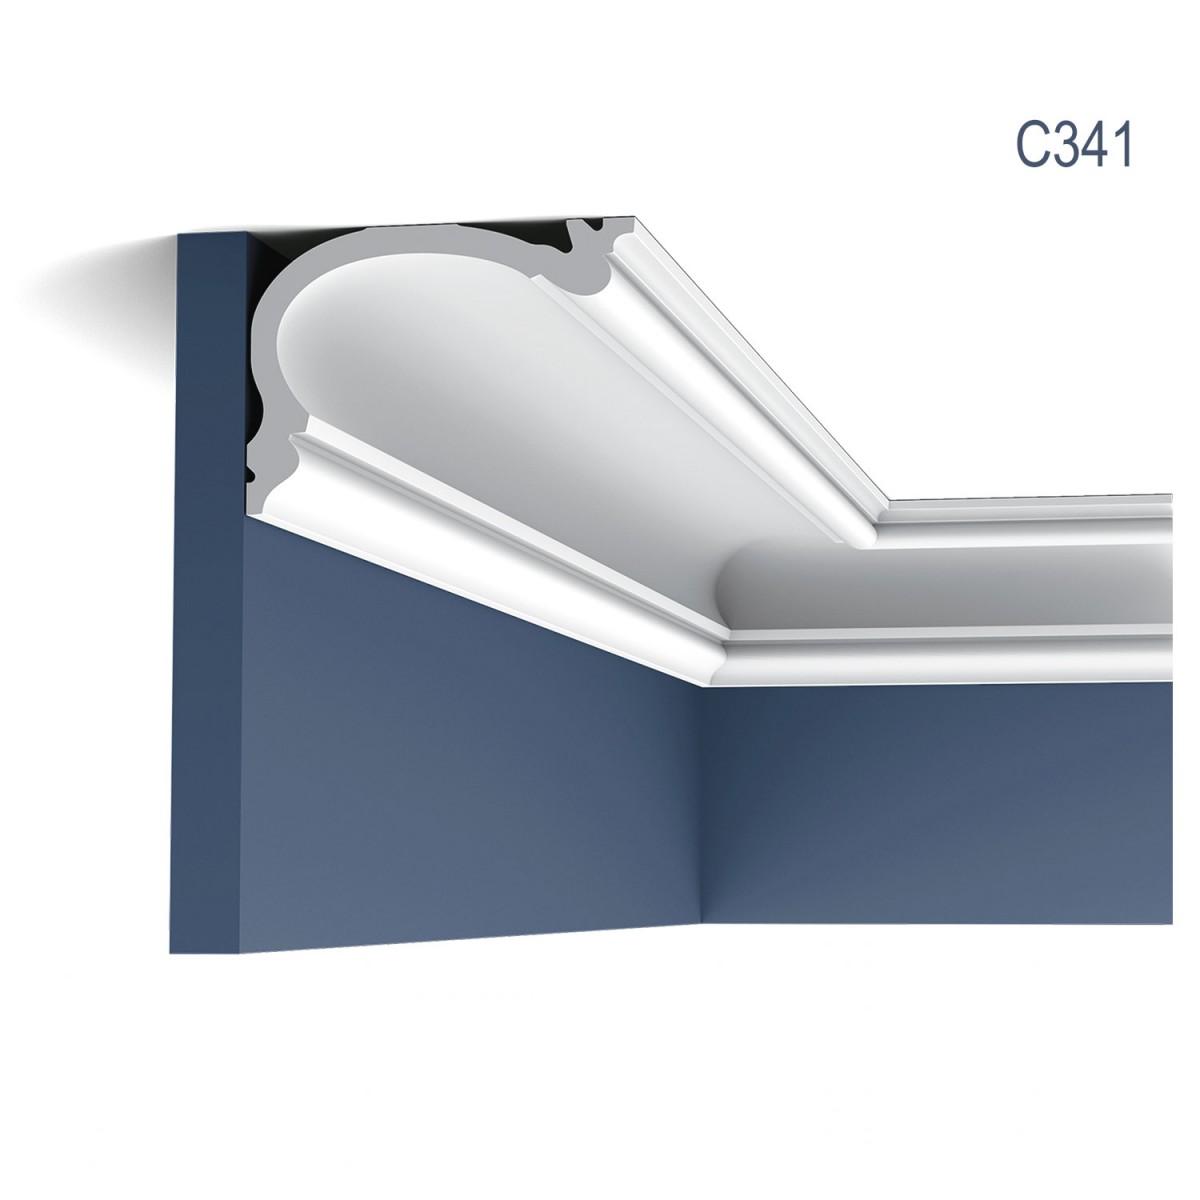 Scafe tavan (iluminat indirect, LED) Orac Decor ORC-C341, material: Duropolimer